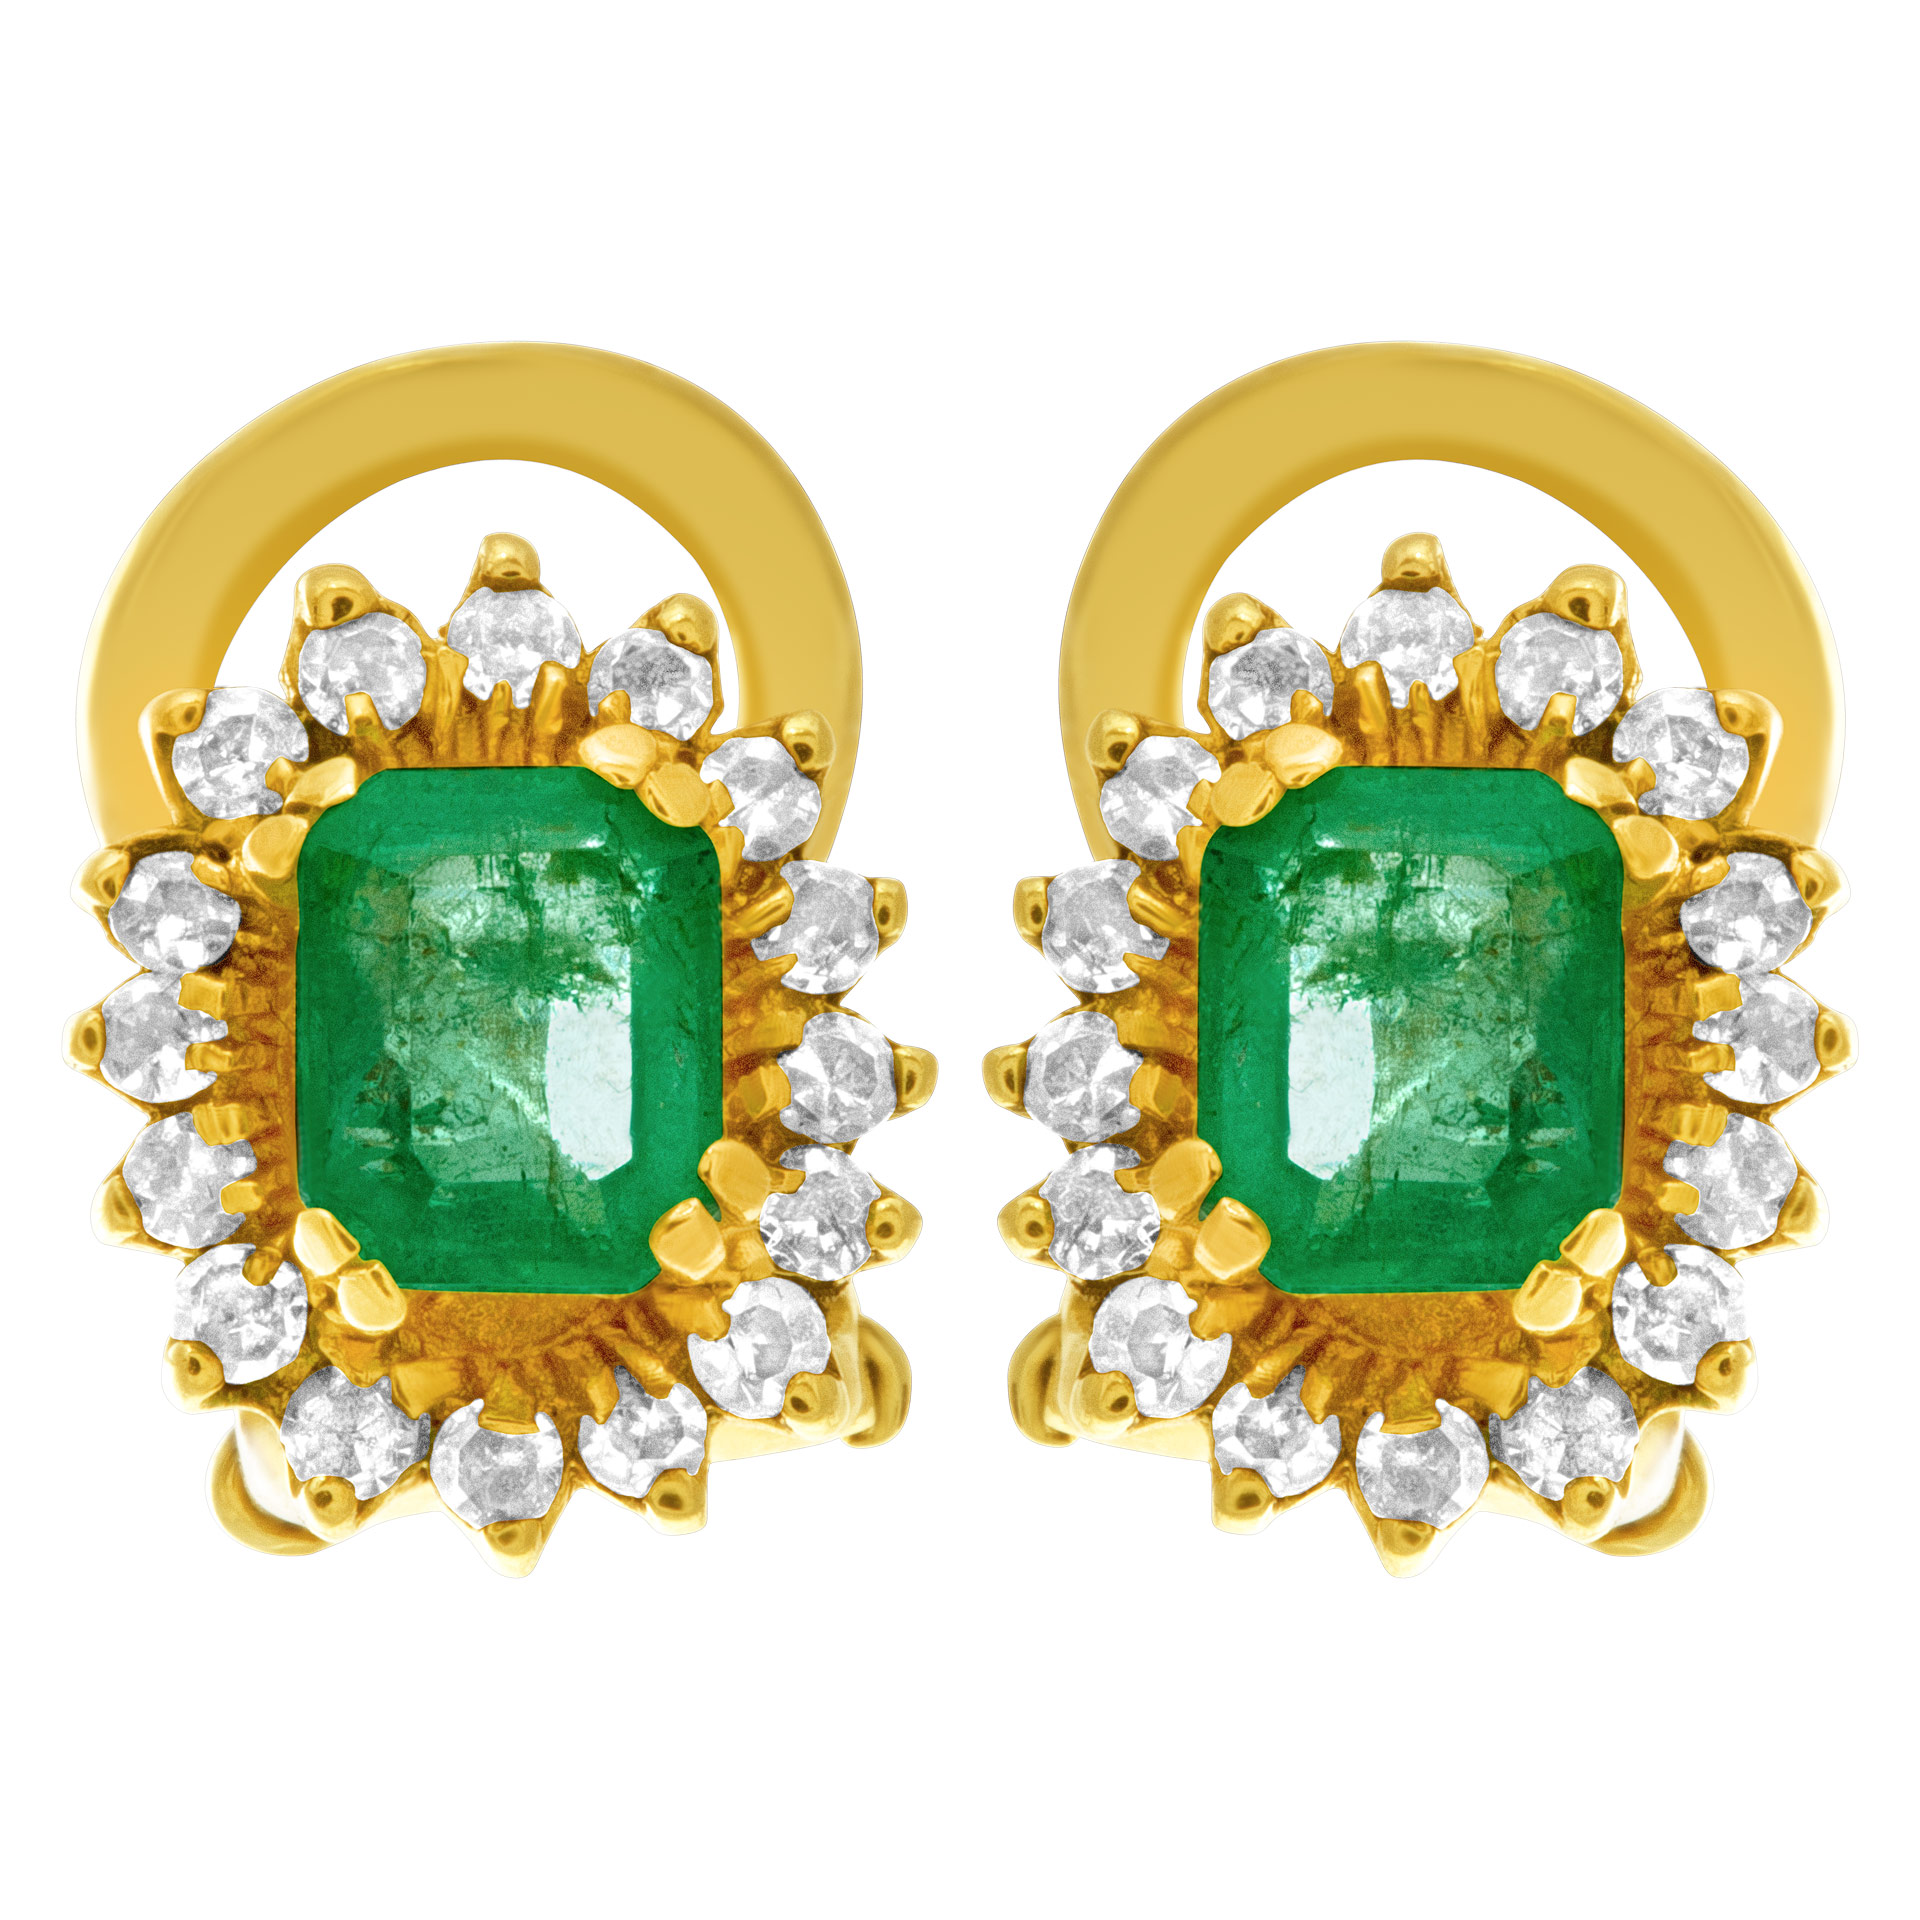 Emerald and diamond earrings in 18k